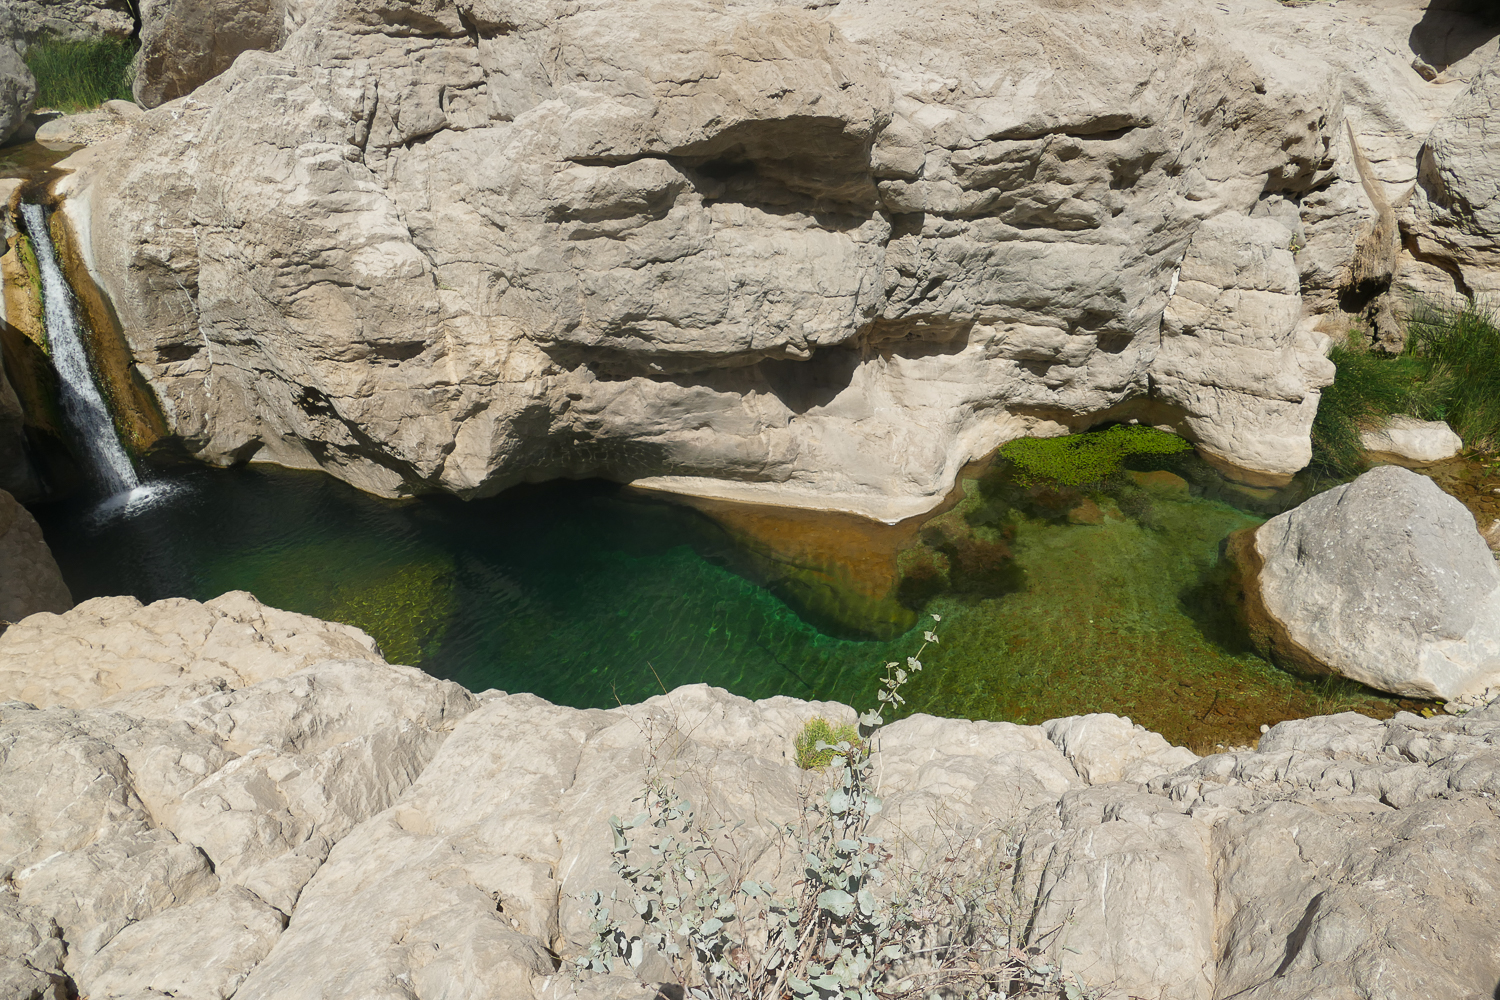 Palmeraie de Wadi bani khalid - Oman, Trésor caché